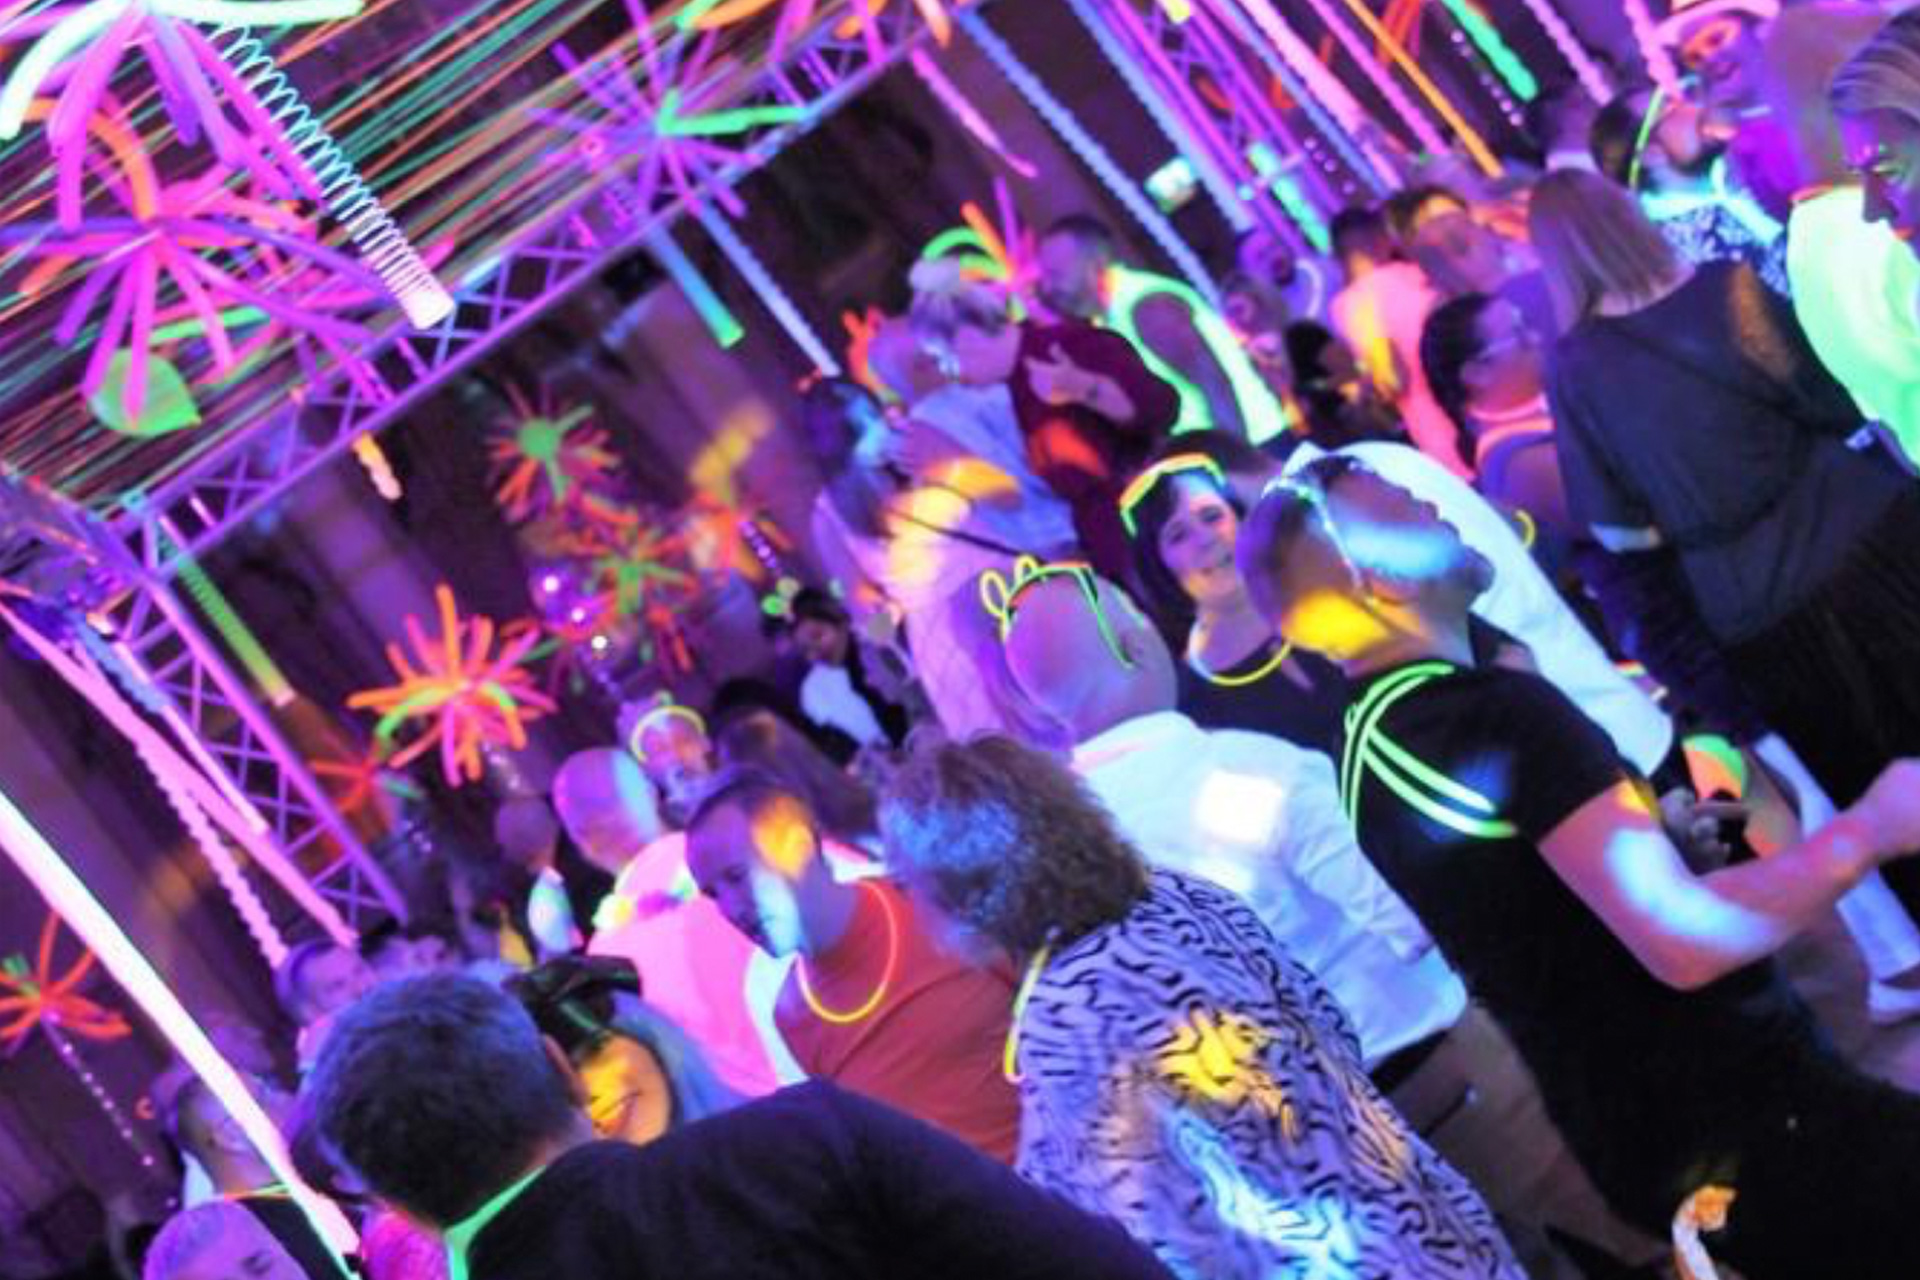 Guests dancing at a disco.